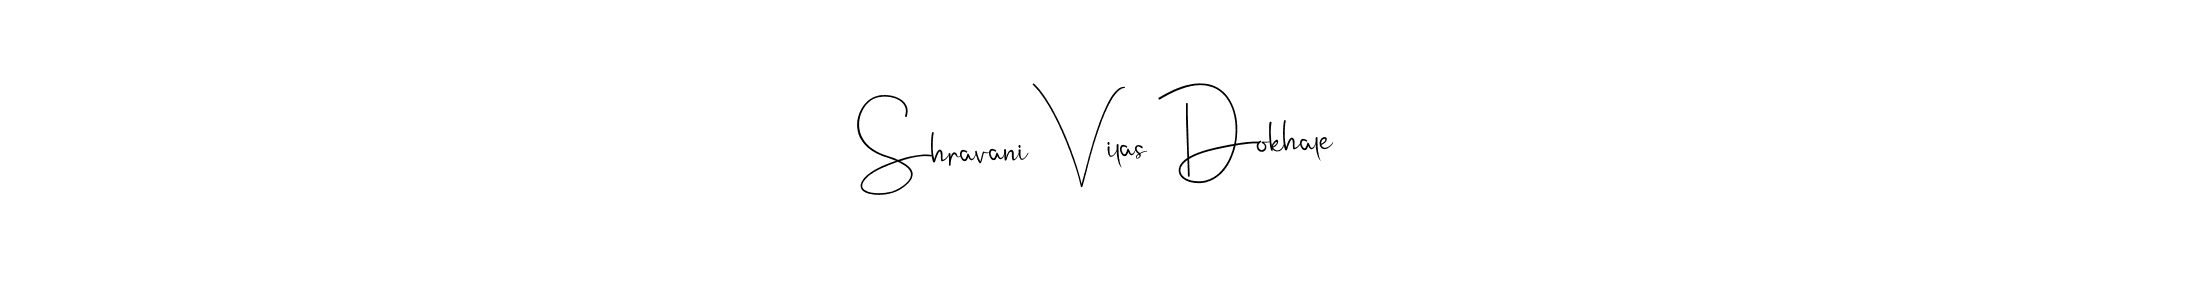 How to Draw Shravani Vilas Dokhale signature style? Andilay-7BmLP is a latest design signature styles for name Shravani Vilas Dokhale. Shravani Vilas Dokhale signature style 4 images and pictures png